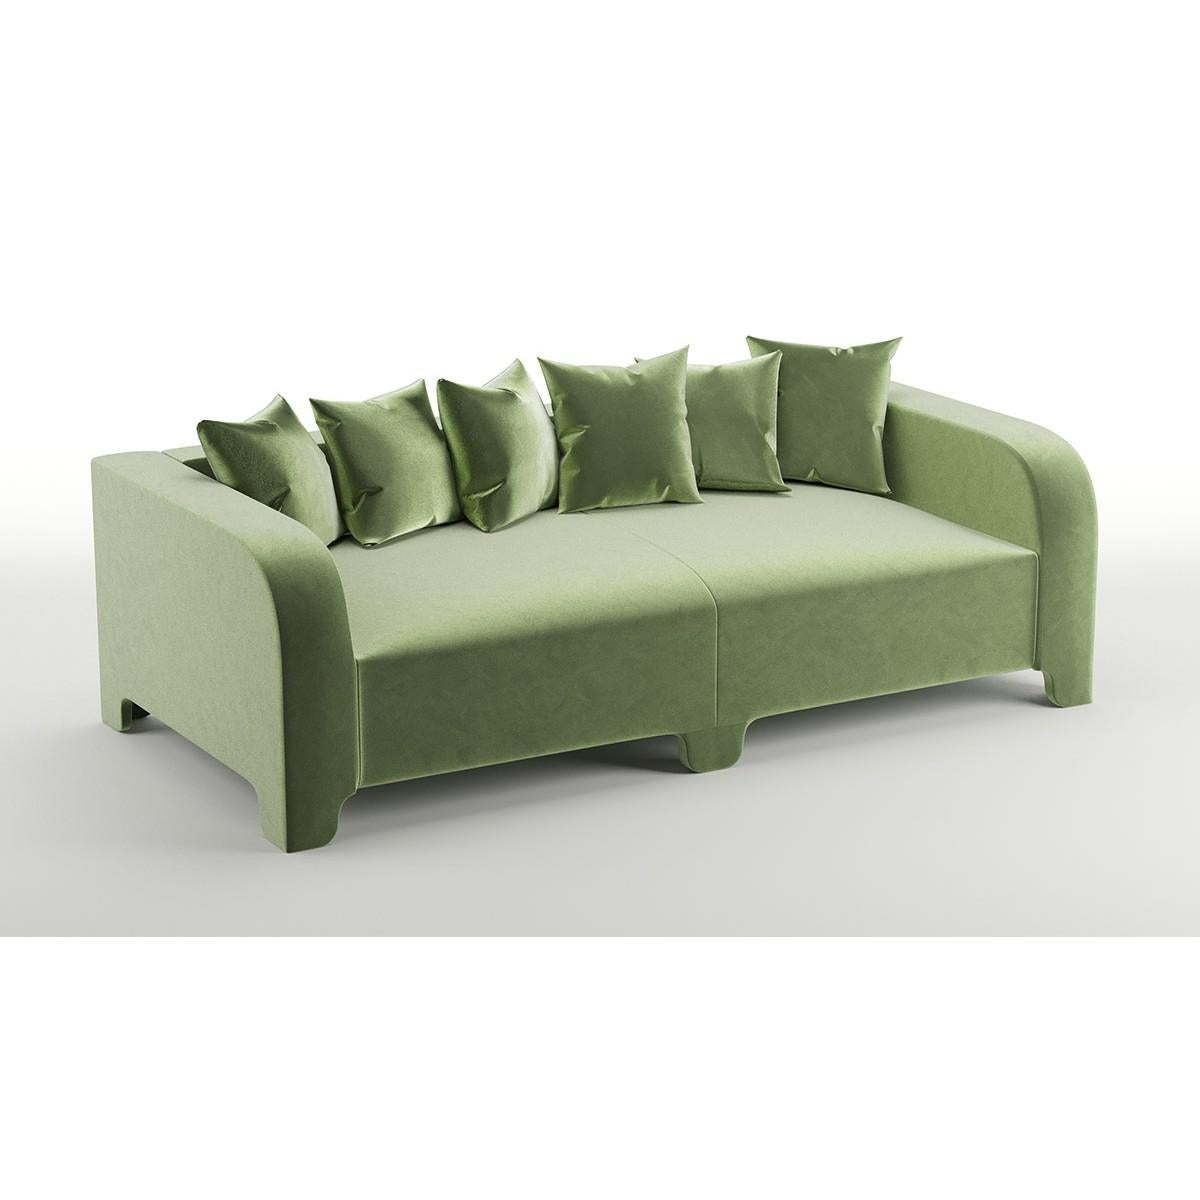 Popus Editions Graziella 3 Seater Sofa in Green Verone Velvet Upholstery